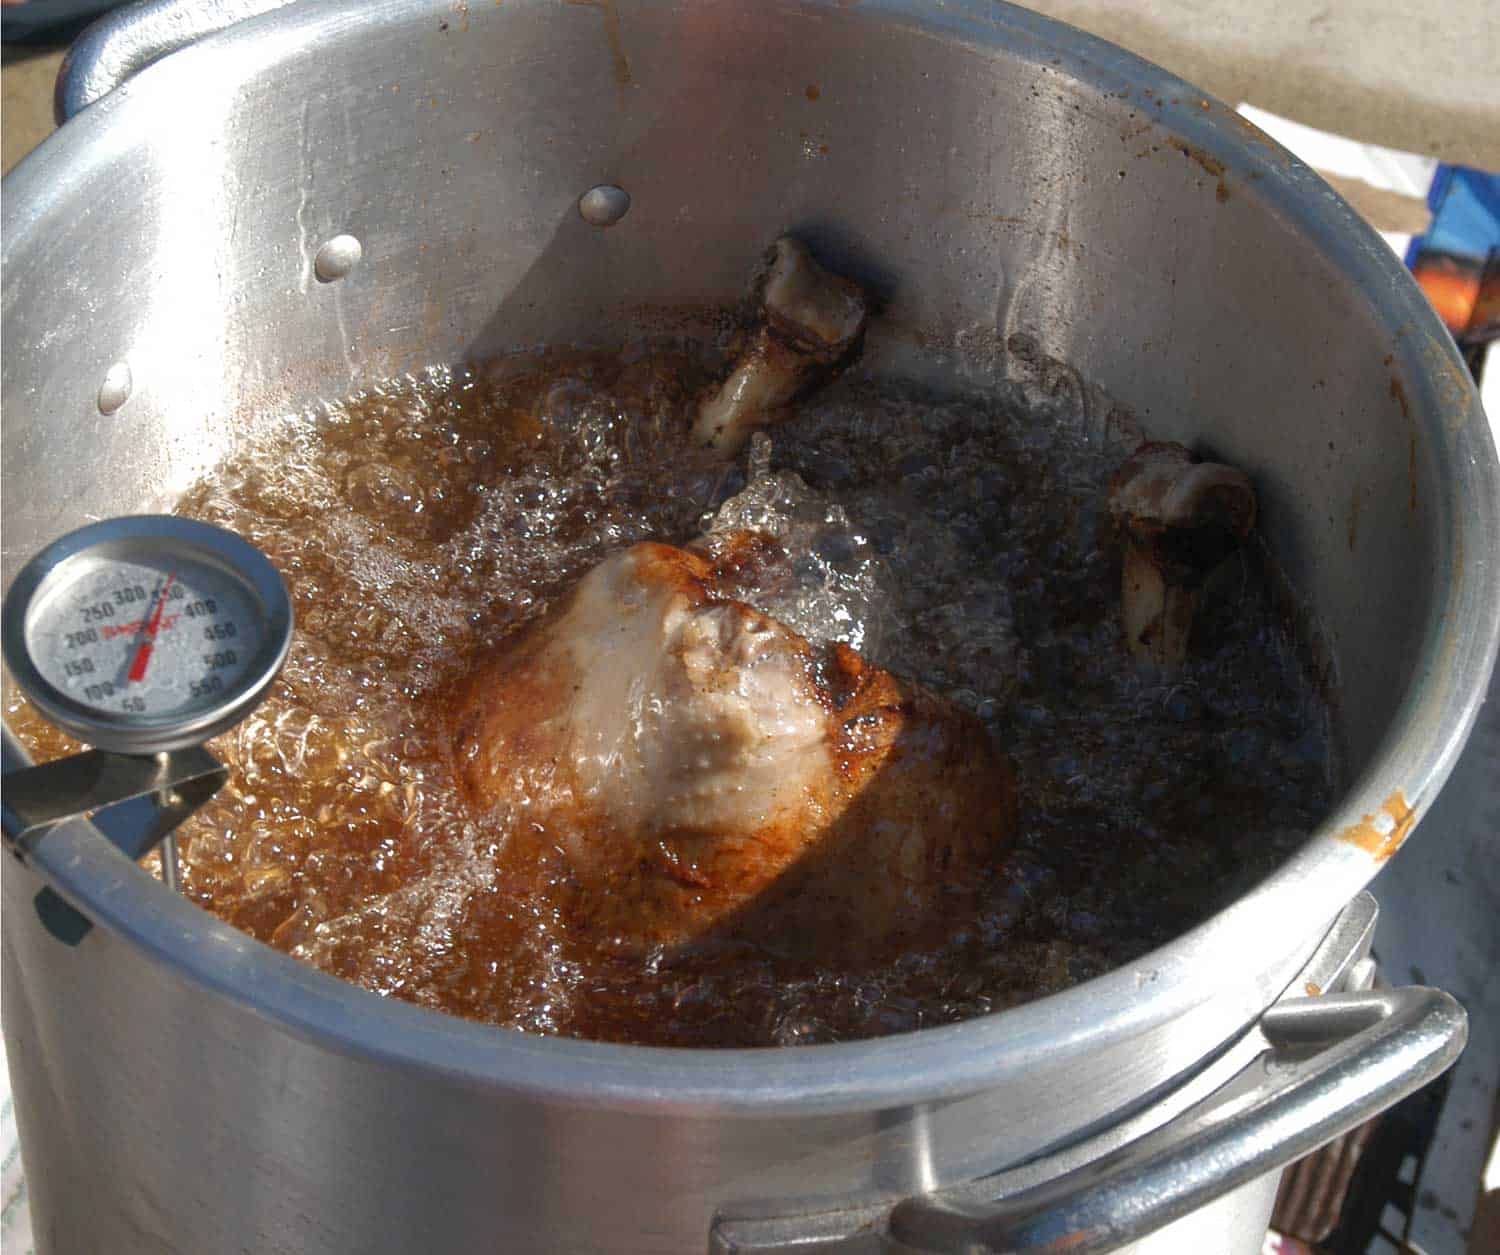 A full-size turkey being fried in peanut oil